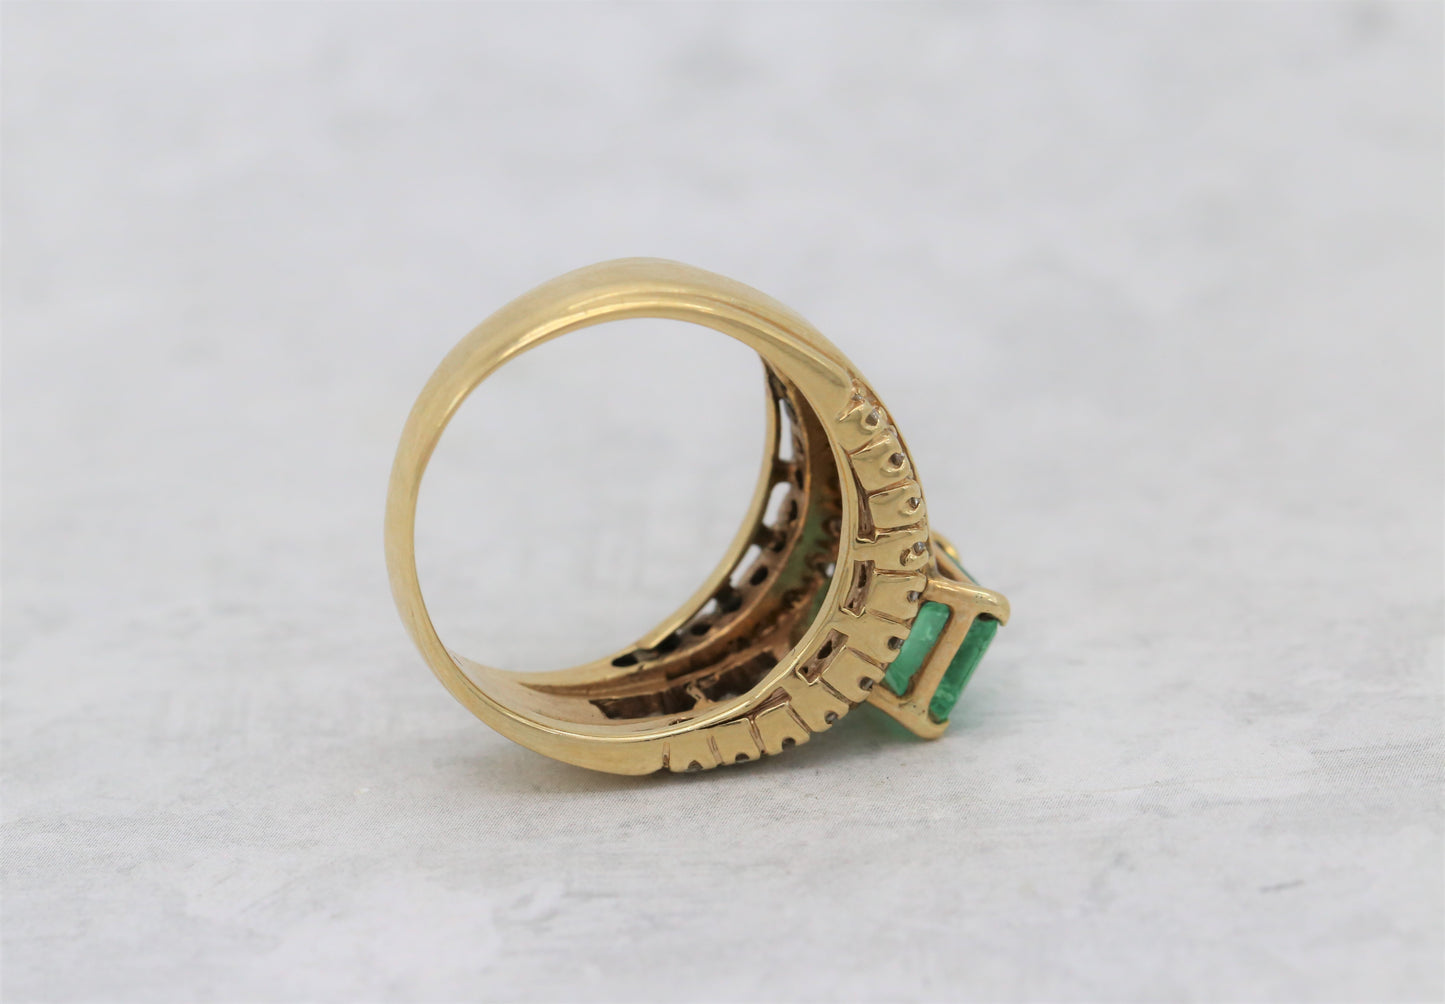 Vintage 14k Yellow Gold Emerald & Diamond Ring, Size 7.5 - 8.0g